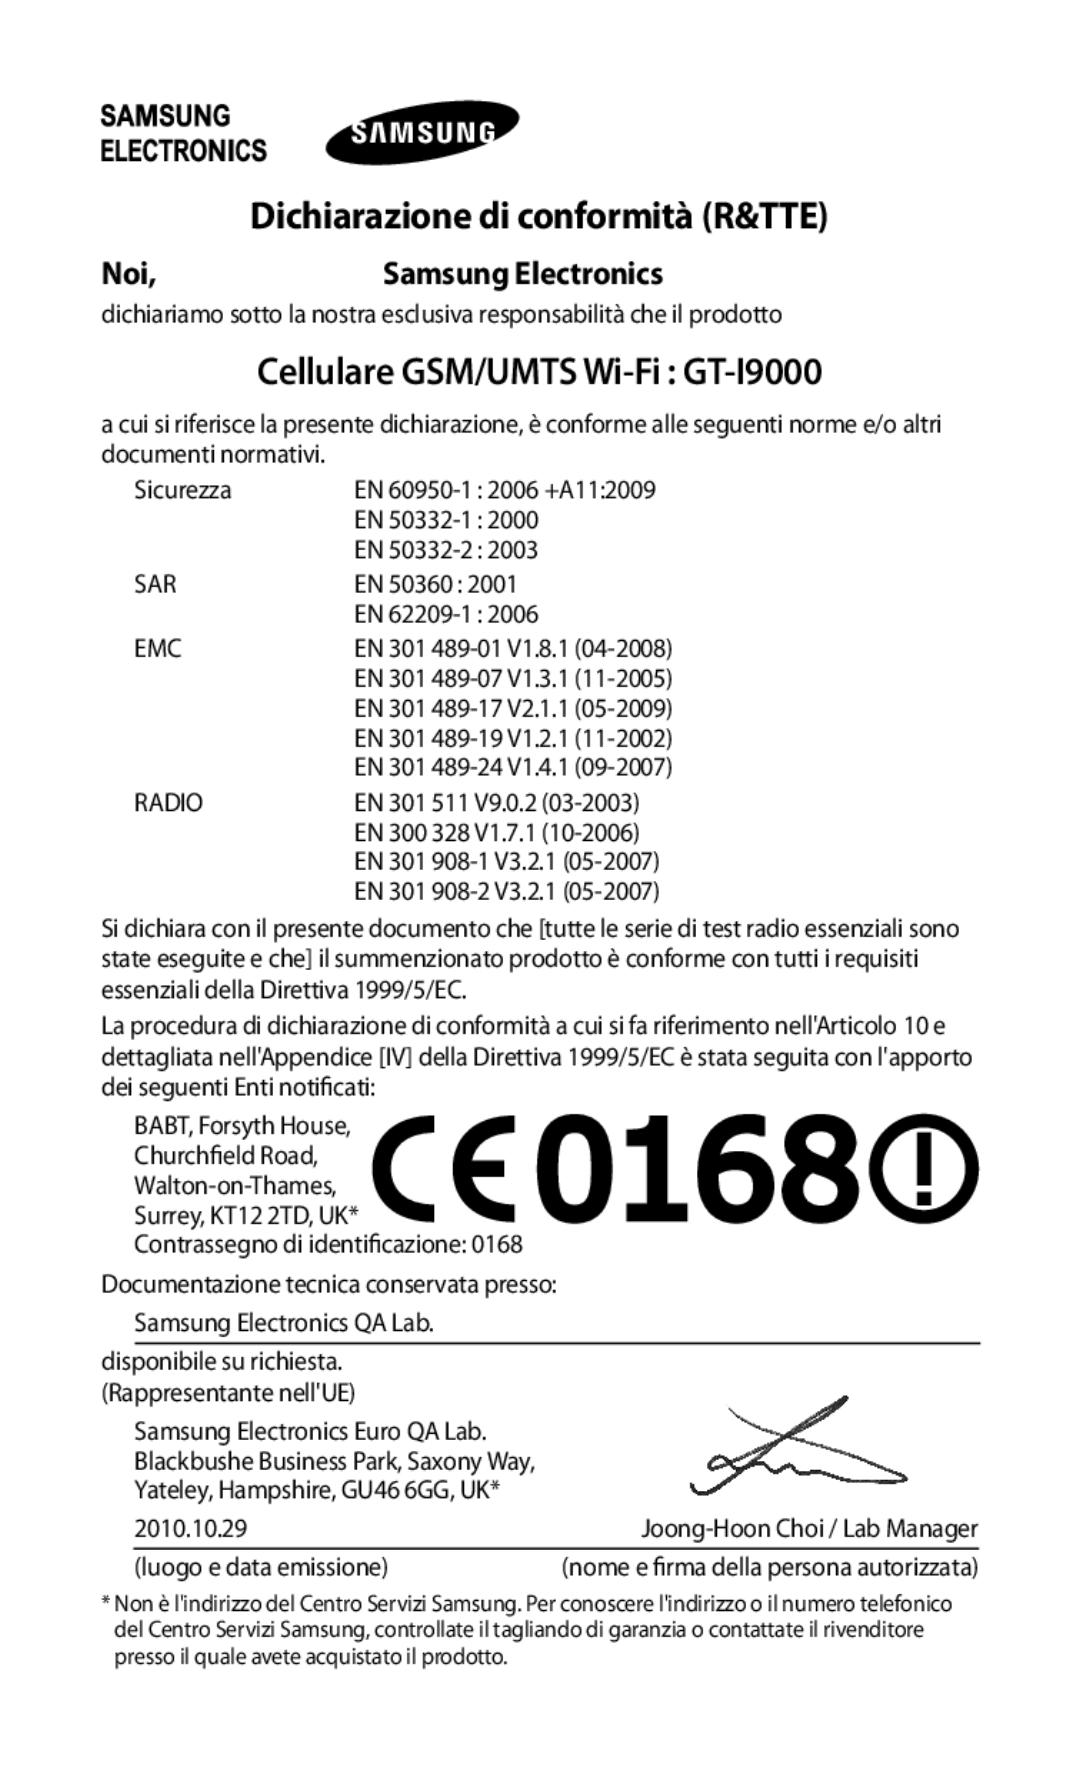 Samsung GT-I9000HKYTIM manual Cellulare GSM/UMTS Wi-Fi GT-I9000, Dichiarazione di conformità R&TTE, Samsung Electronics 